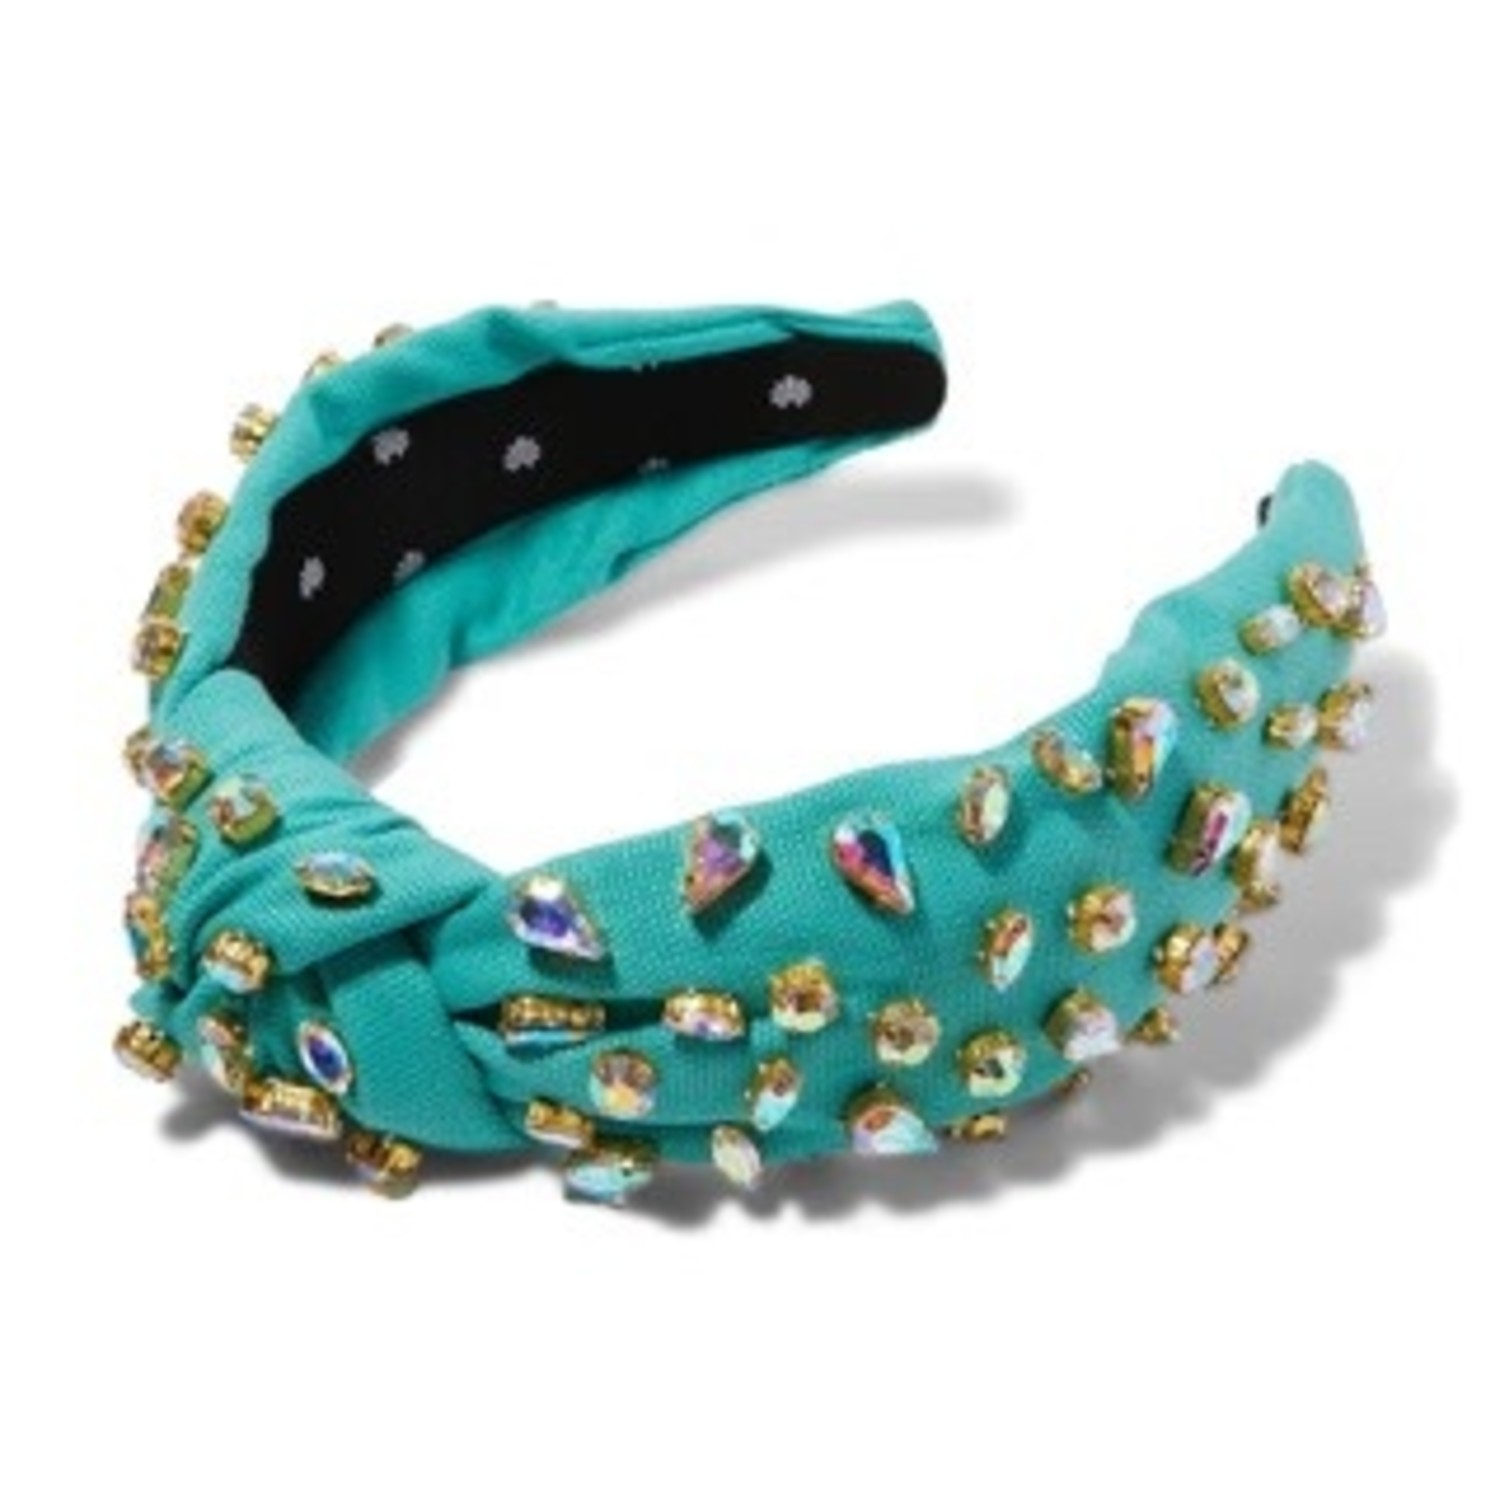 Turquoise Jeweled - Southern Avenue Headband Knotted Rainbow Company Candy